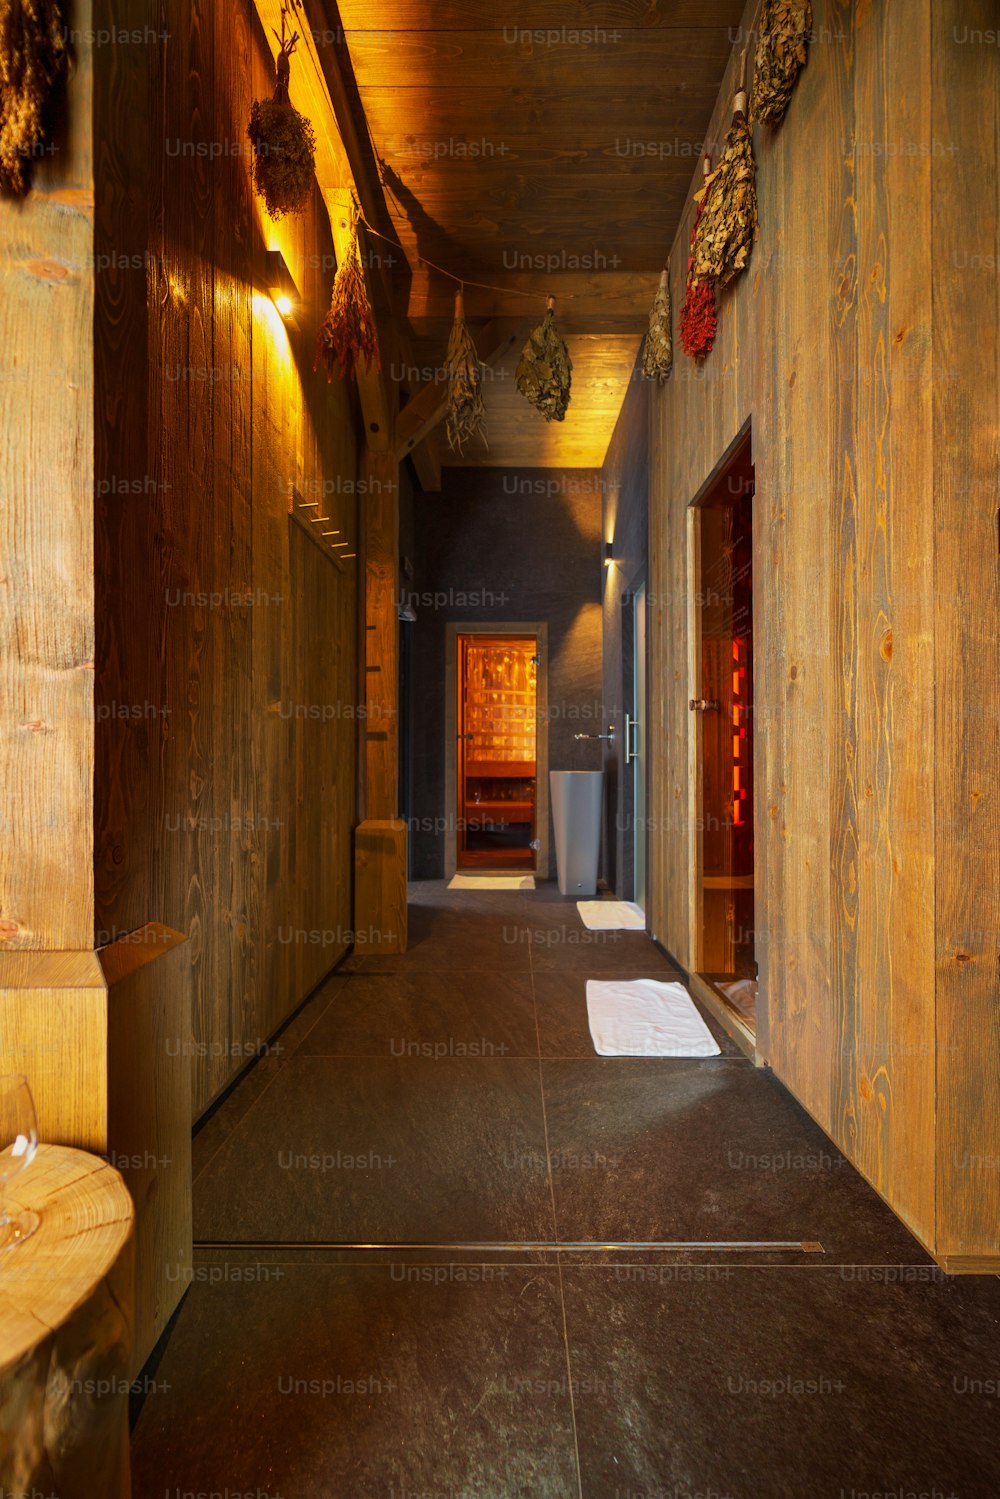 An interior of a luxury spa wellness center with sauna.